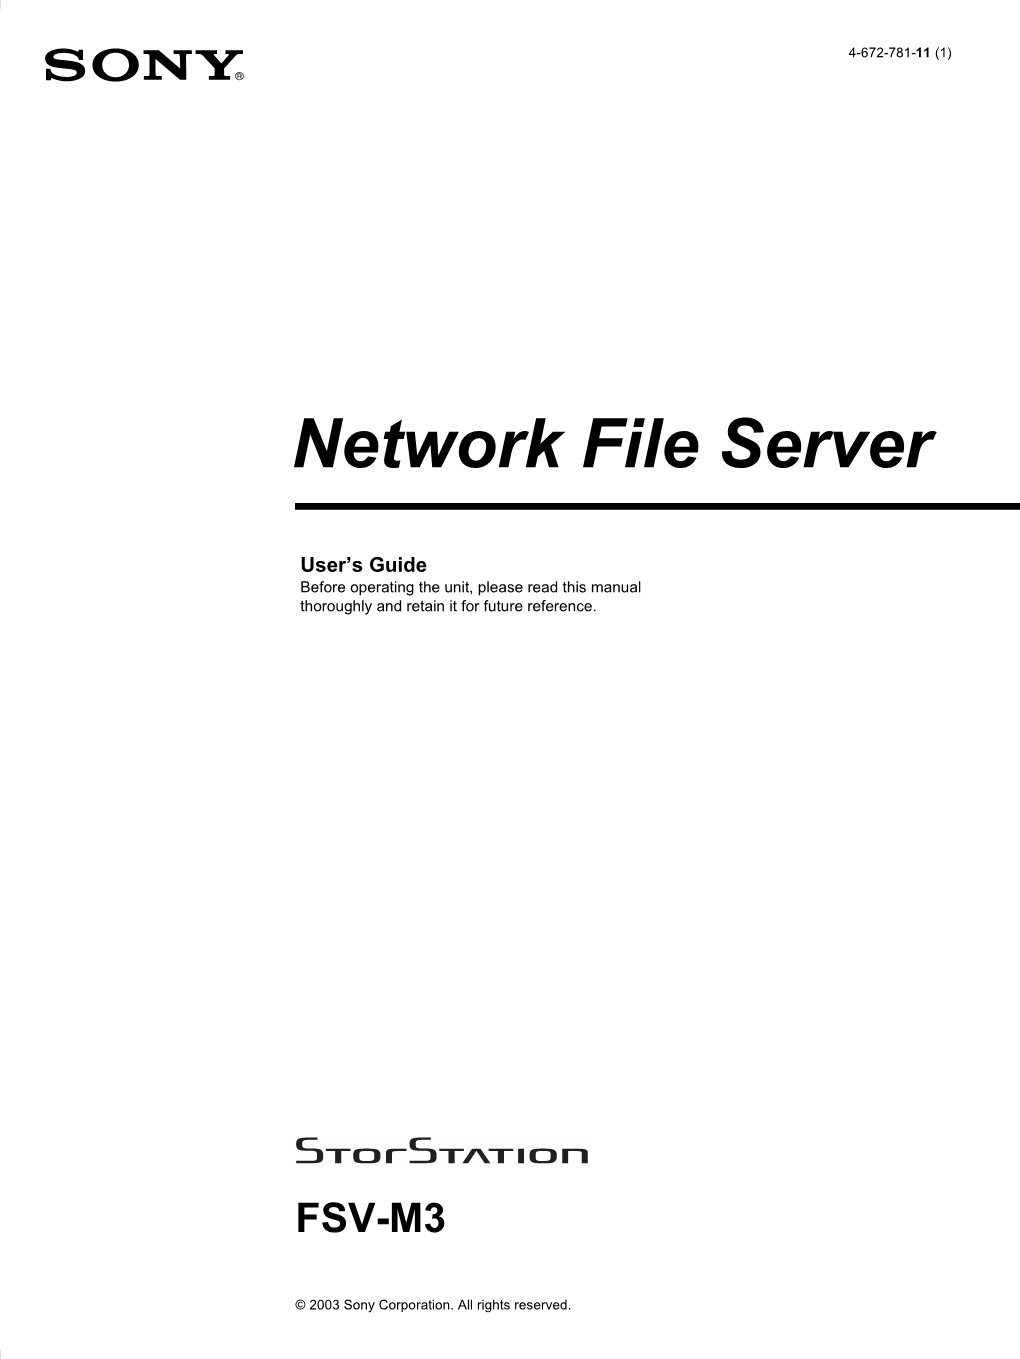 Network File Server